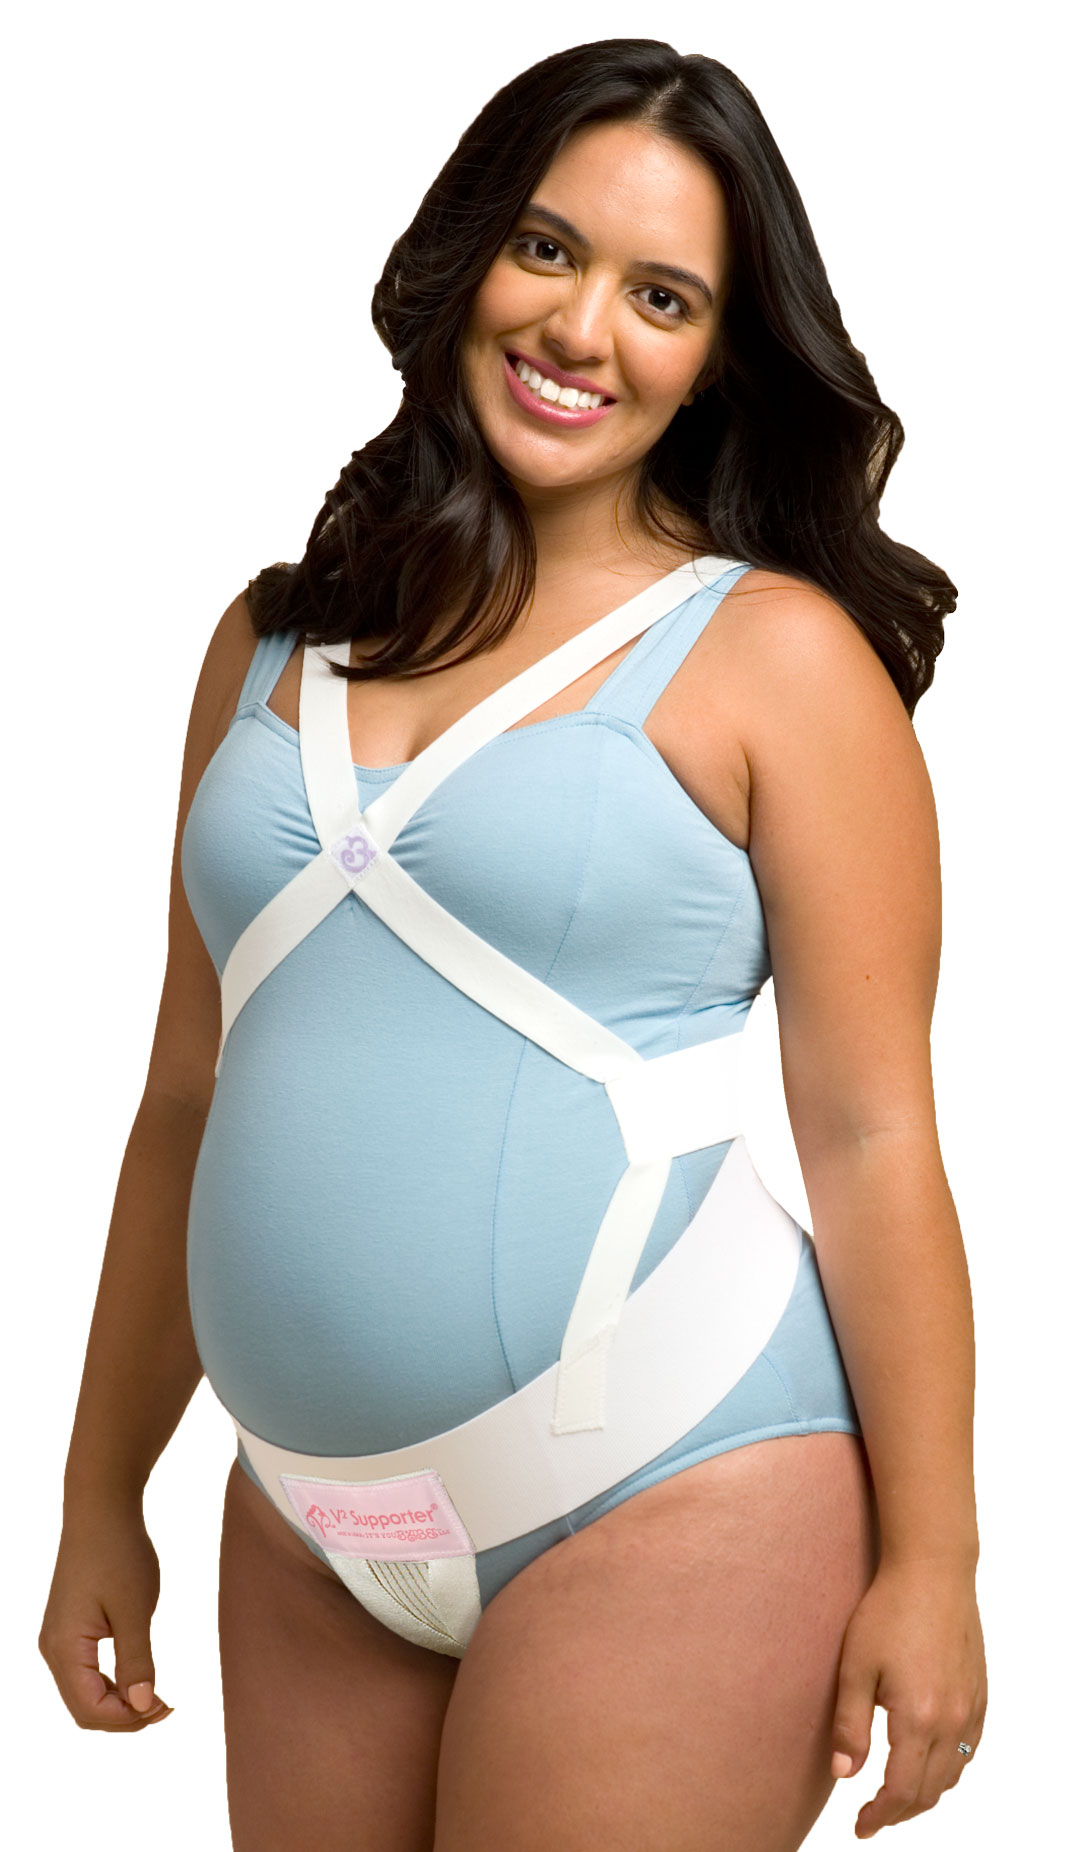 Best Cradle - Prenatal Cradle Ultimate Pregnancy Support